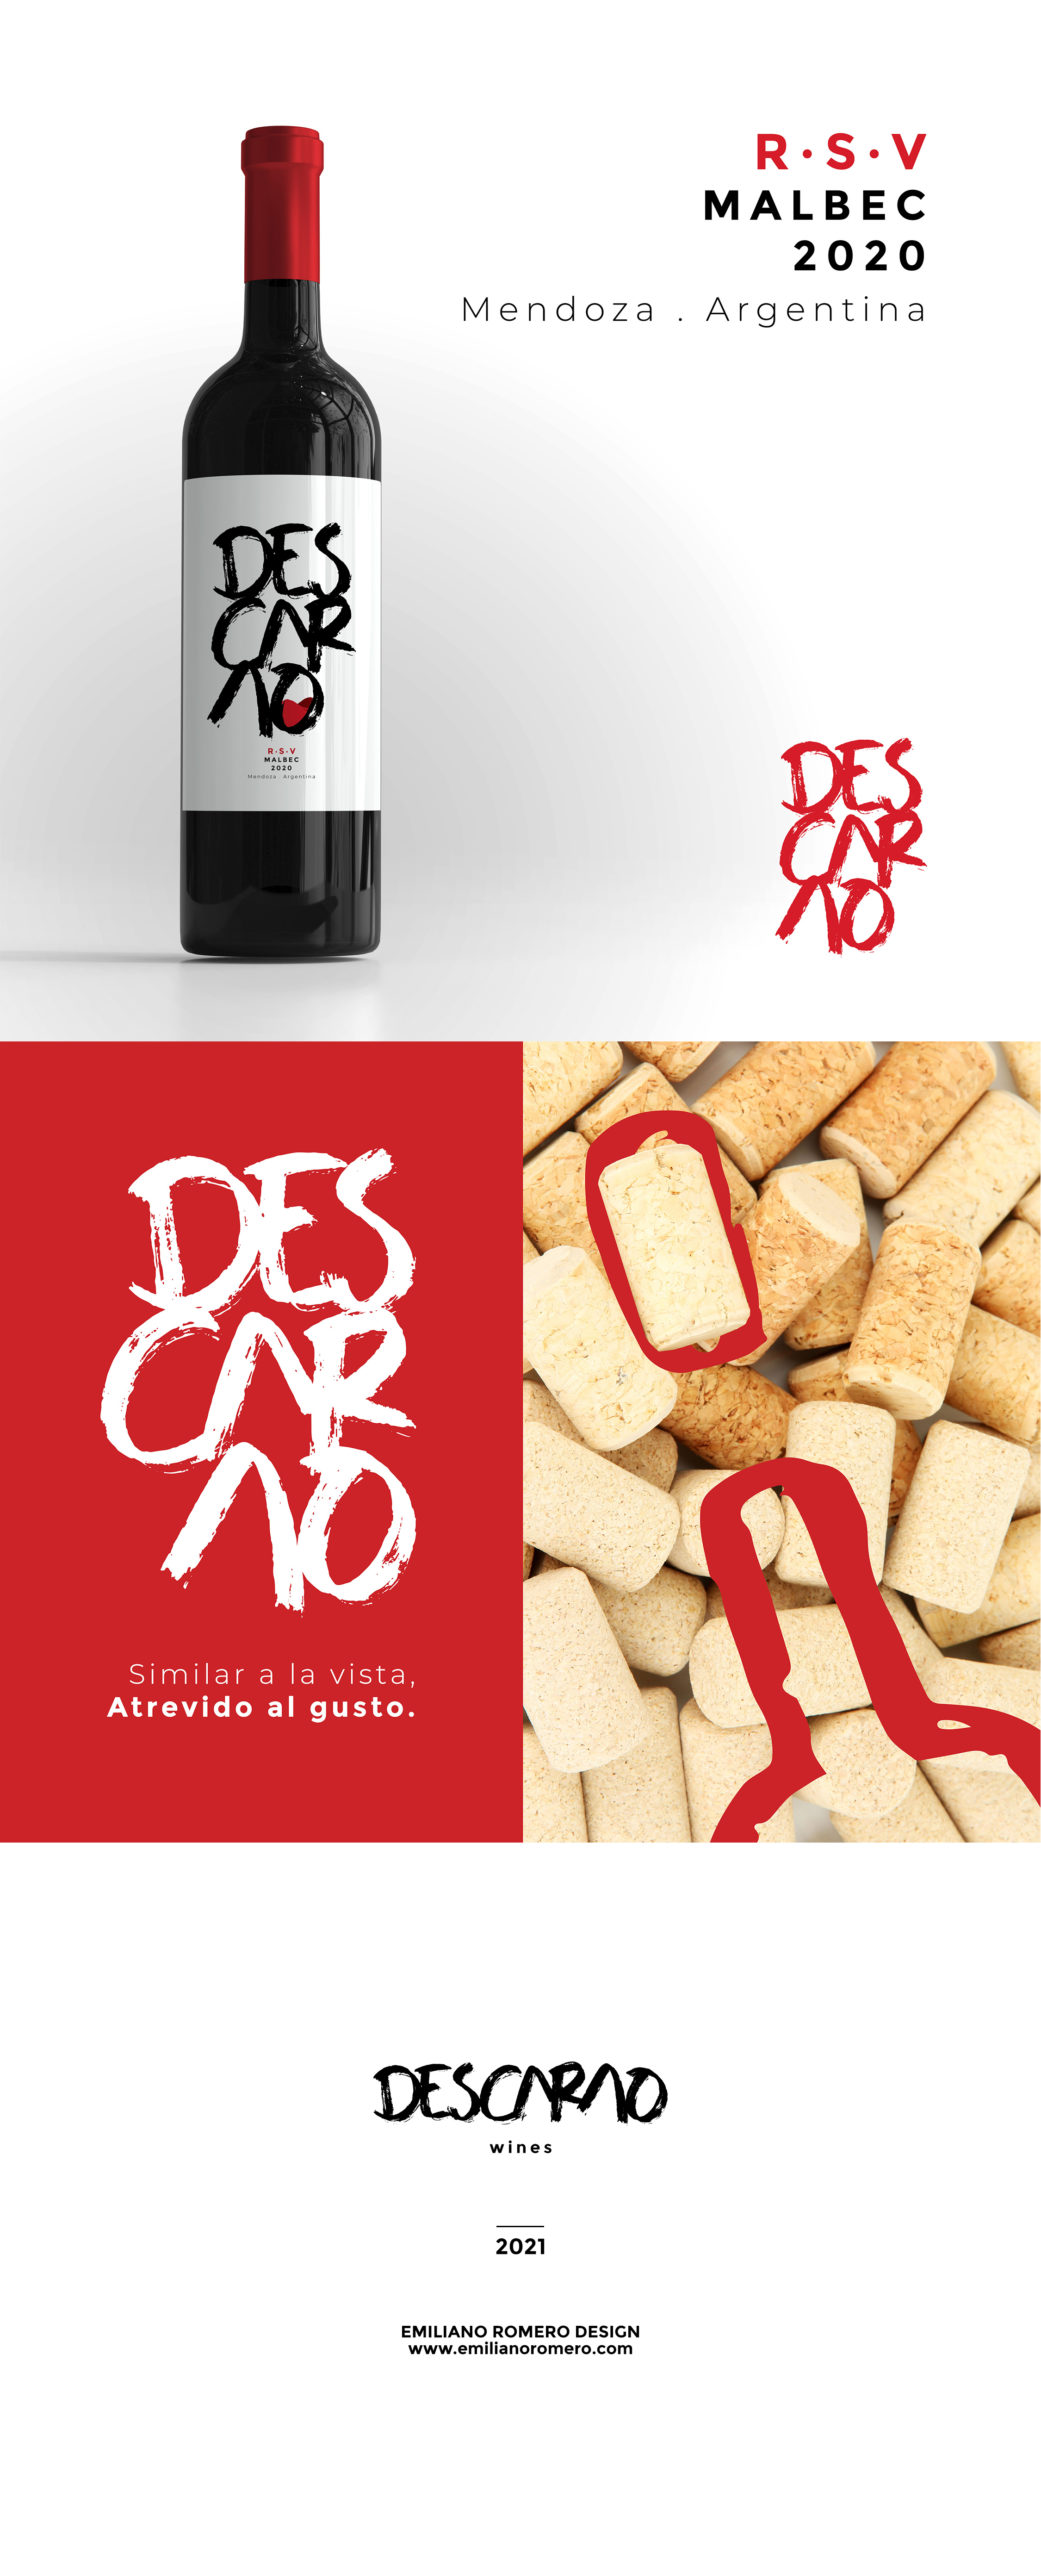 Emiliano_Romero_Design_Branding_DescaraoWines_2021_04